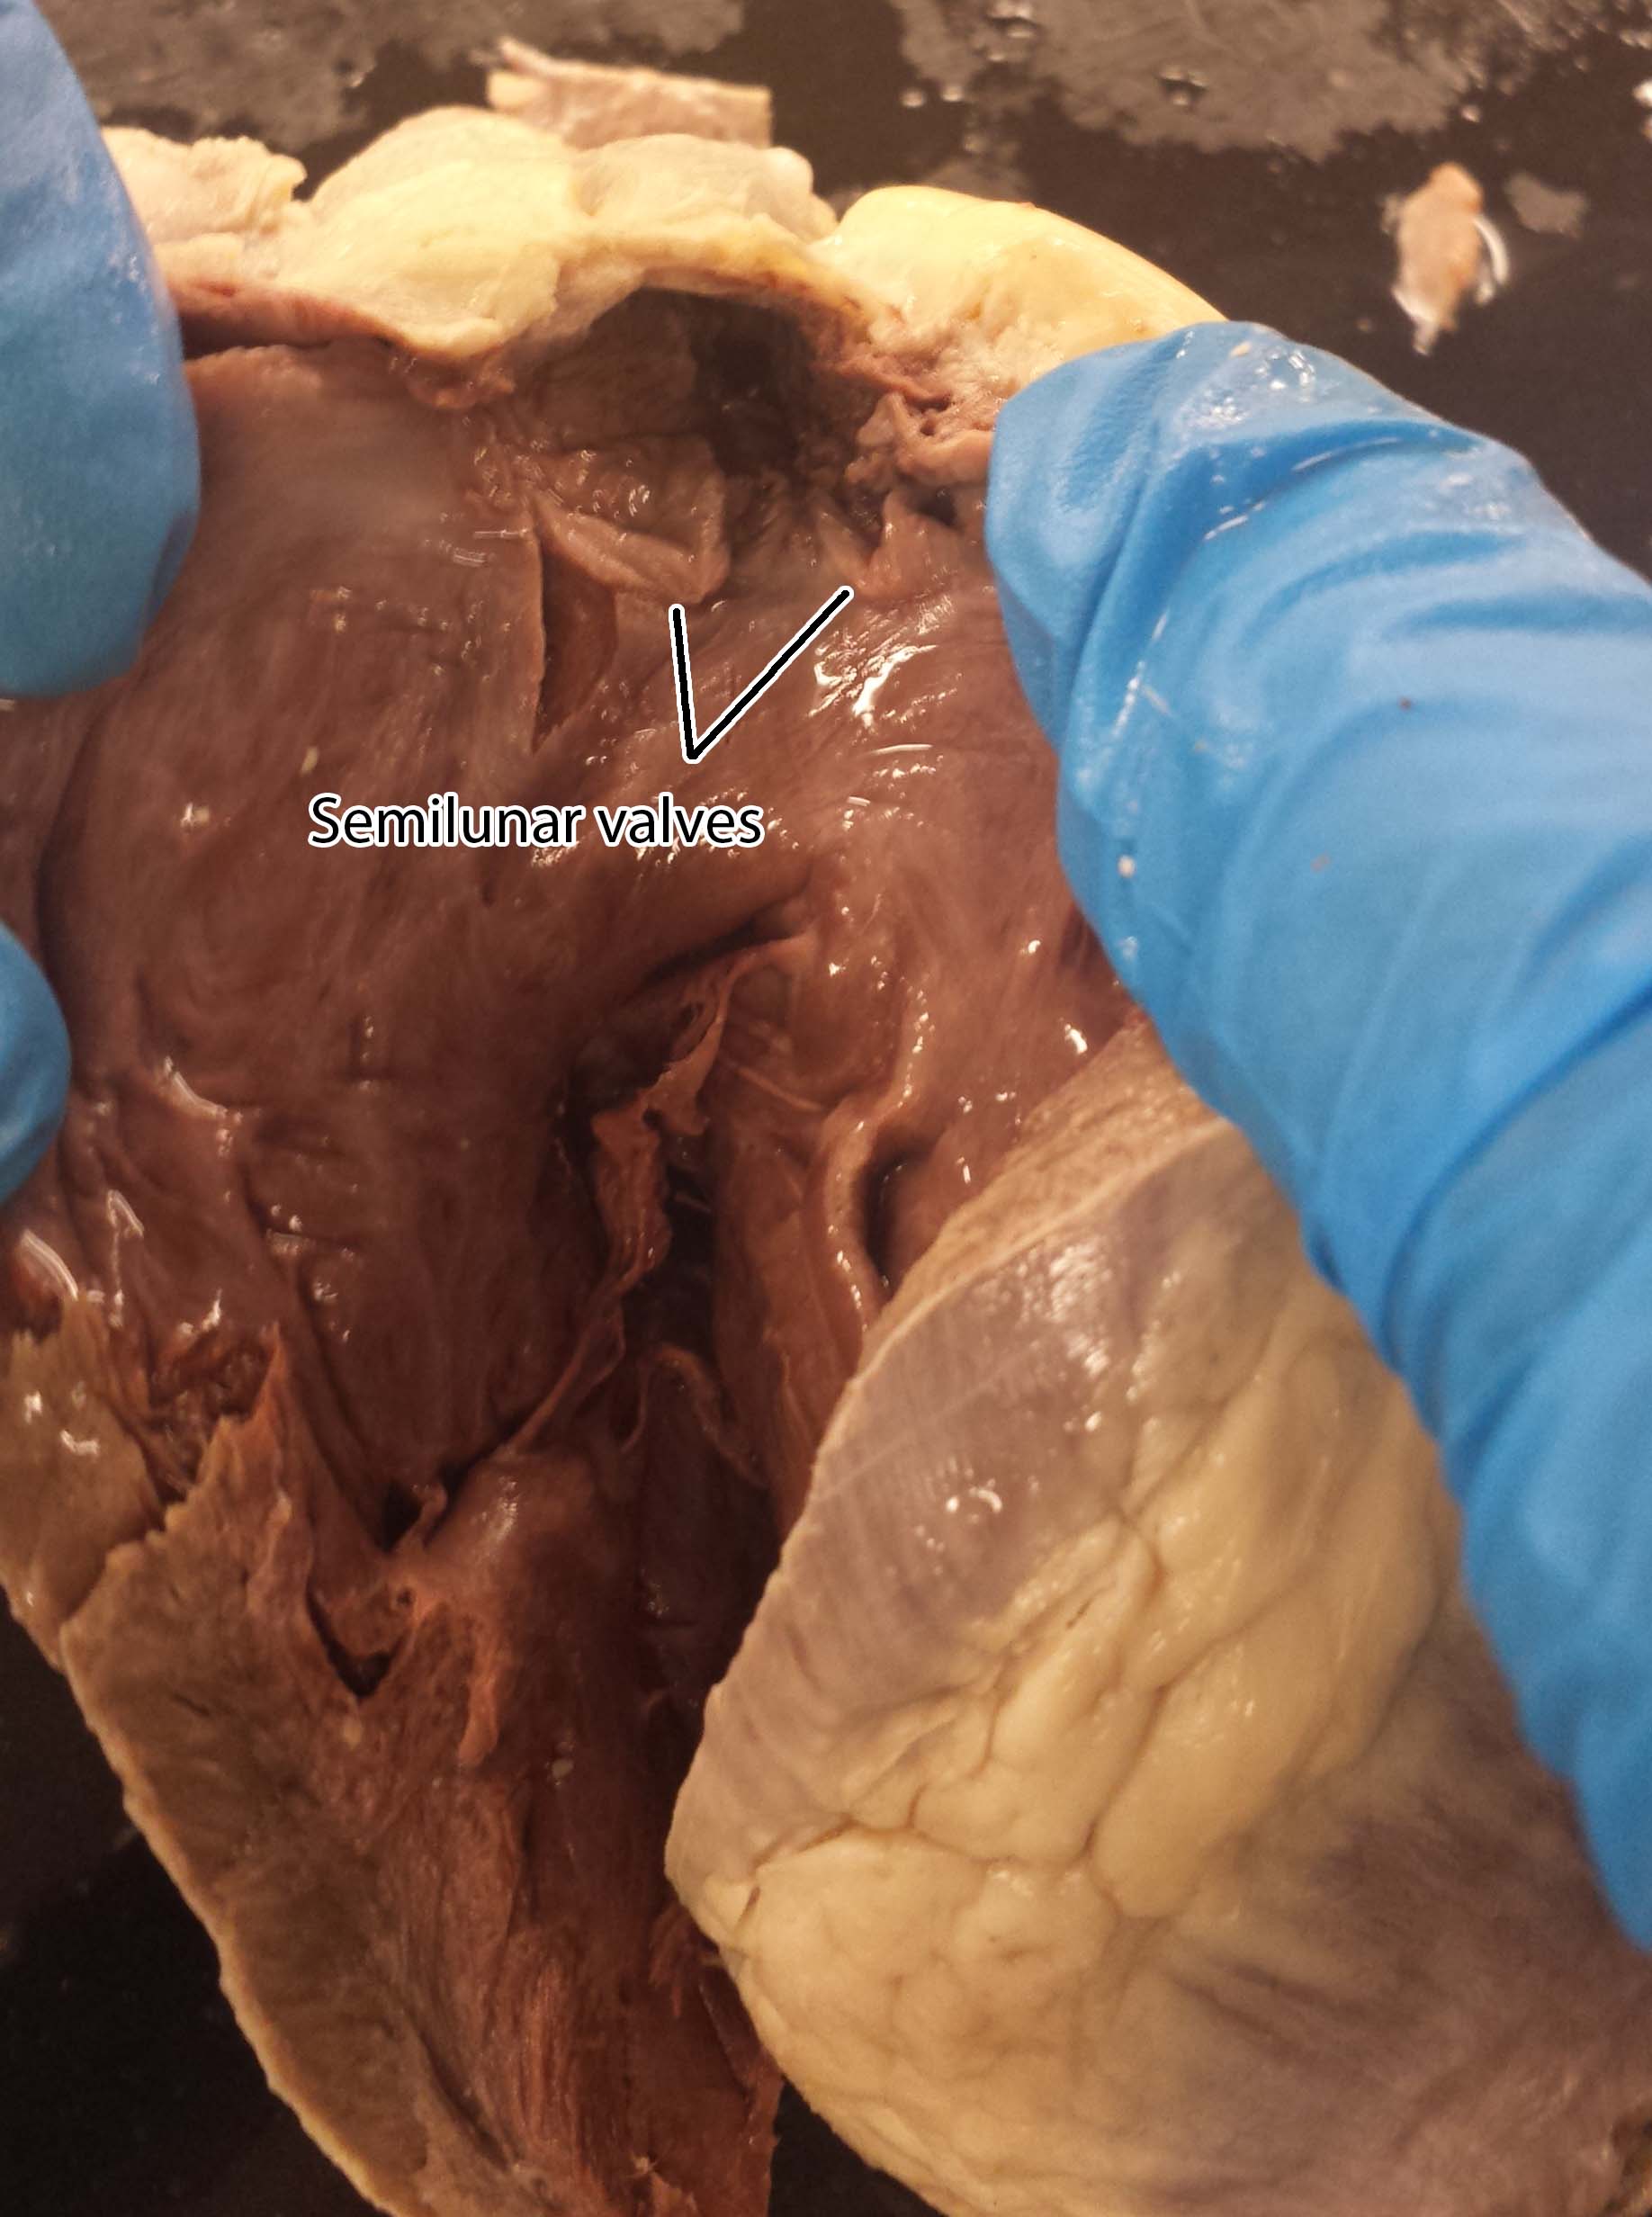 Heart Dissection Photos